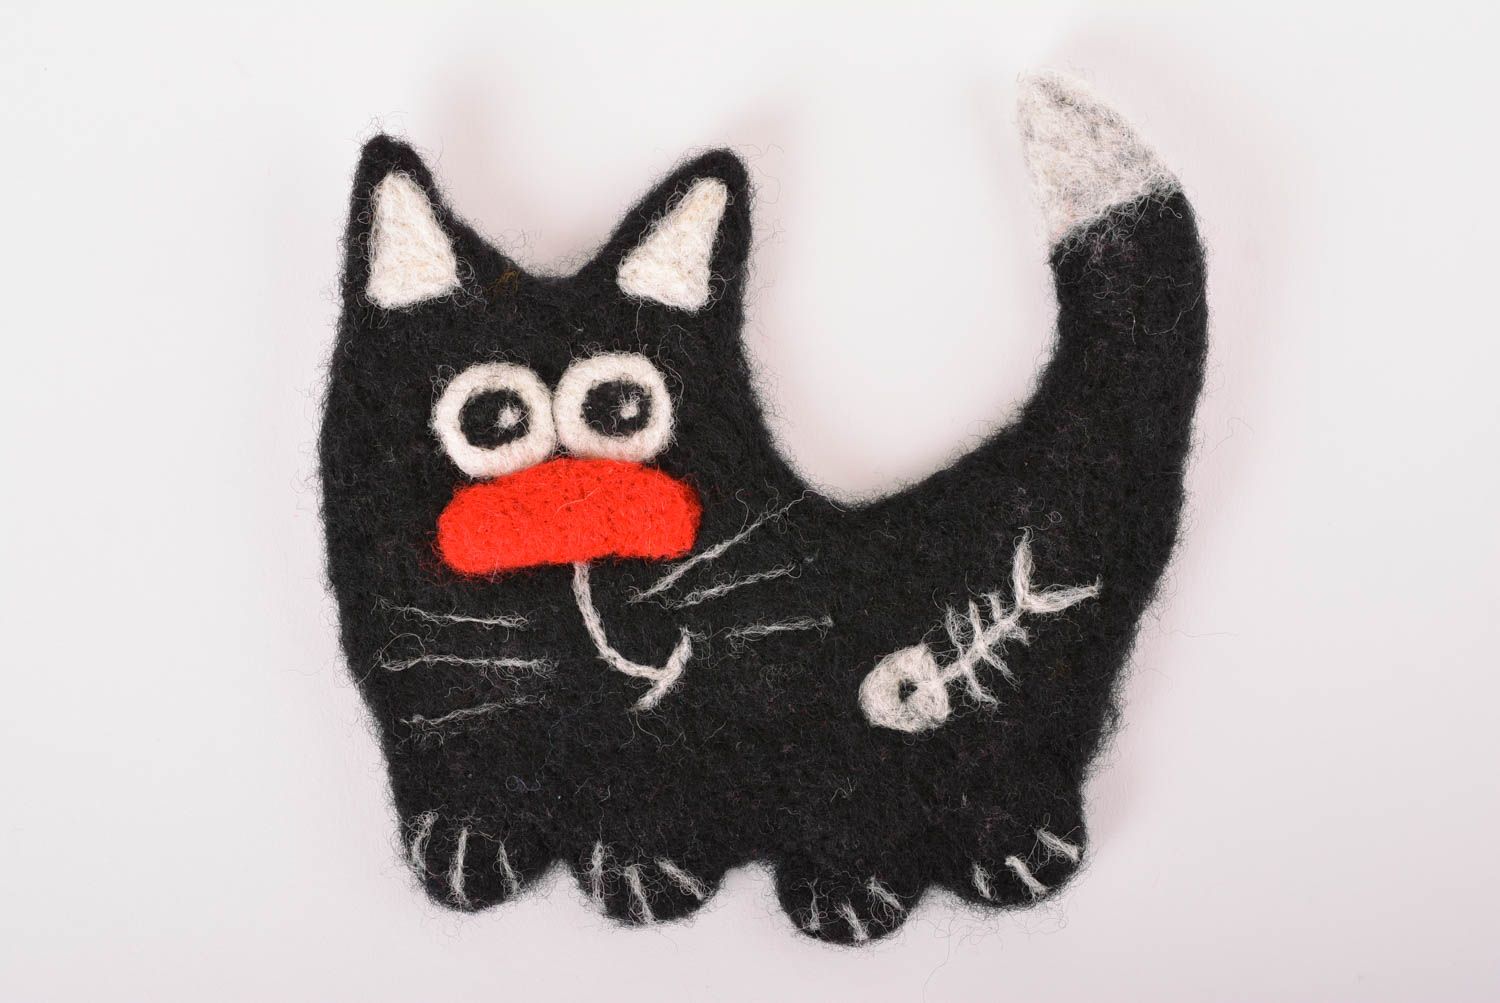 Imán de nevera con forma de gato negro regalo original elemento decorativo foto 1